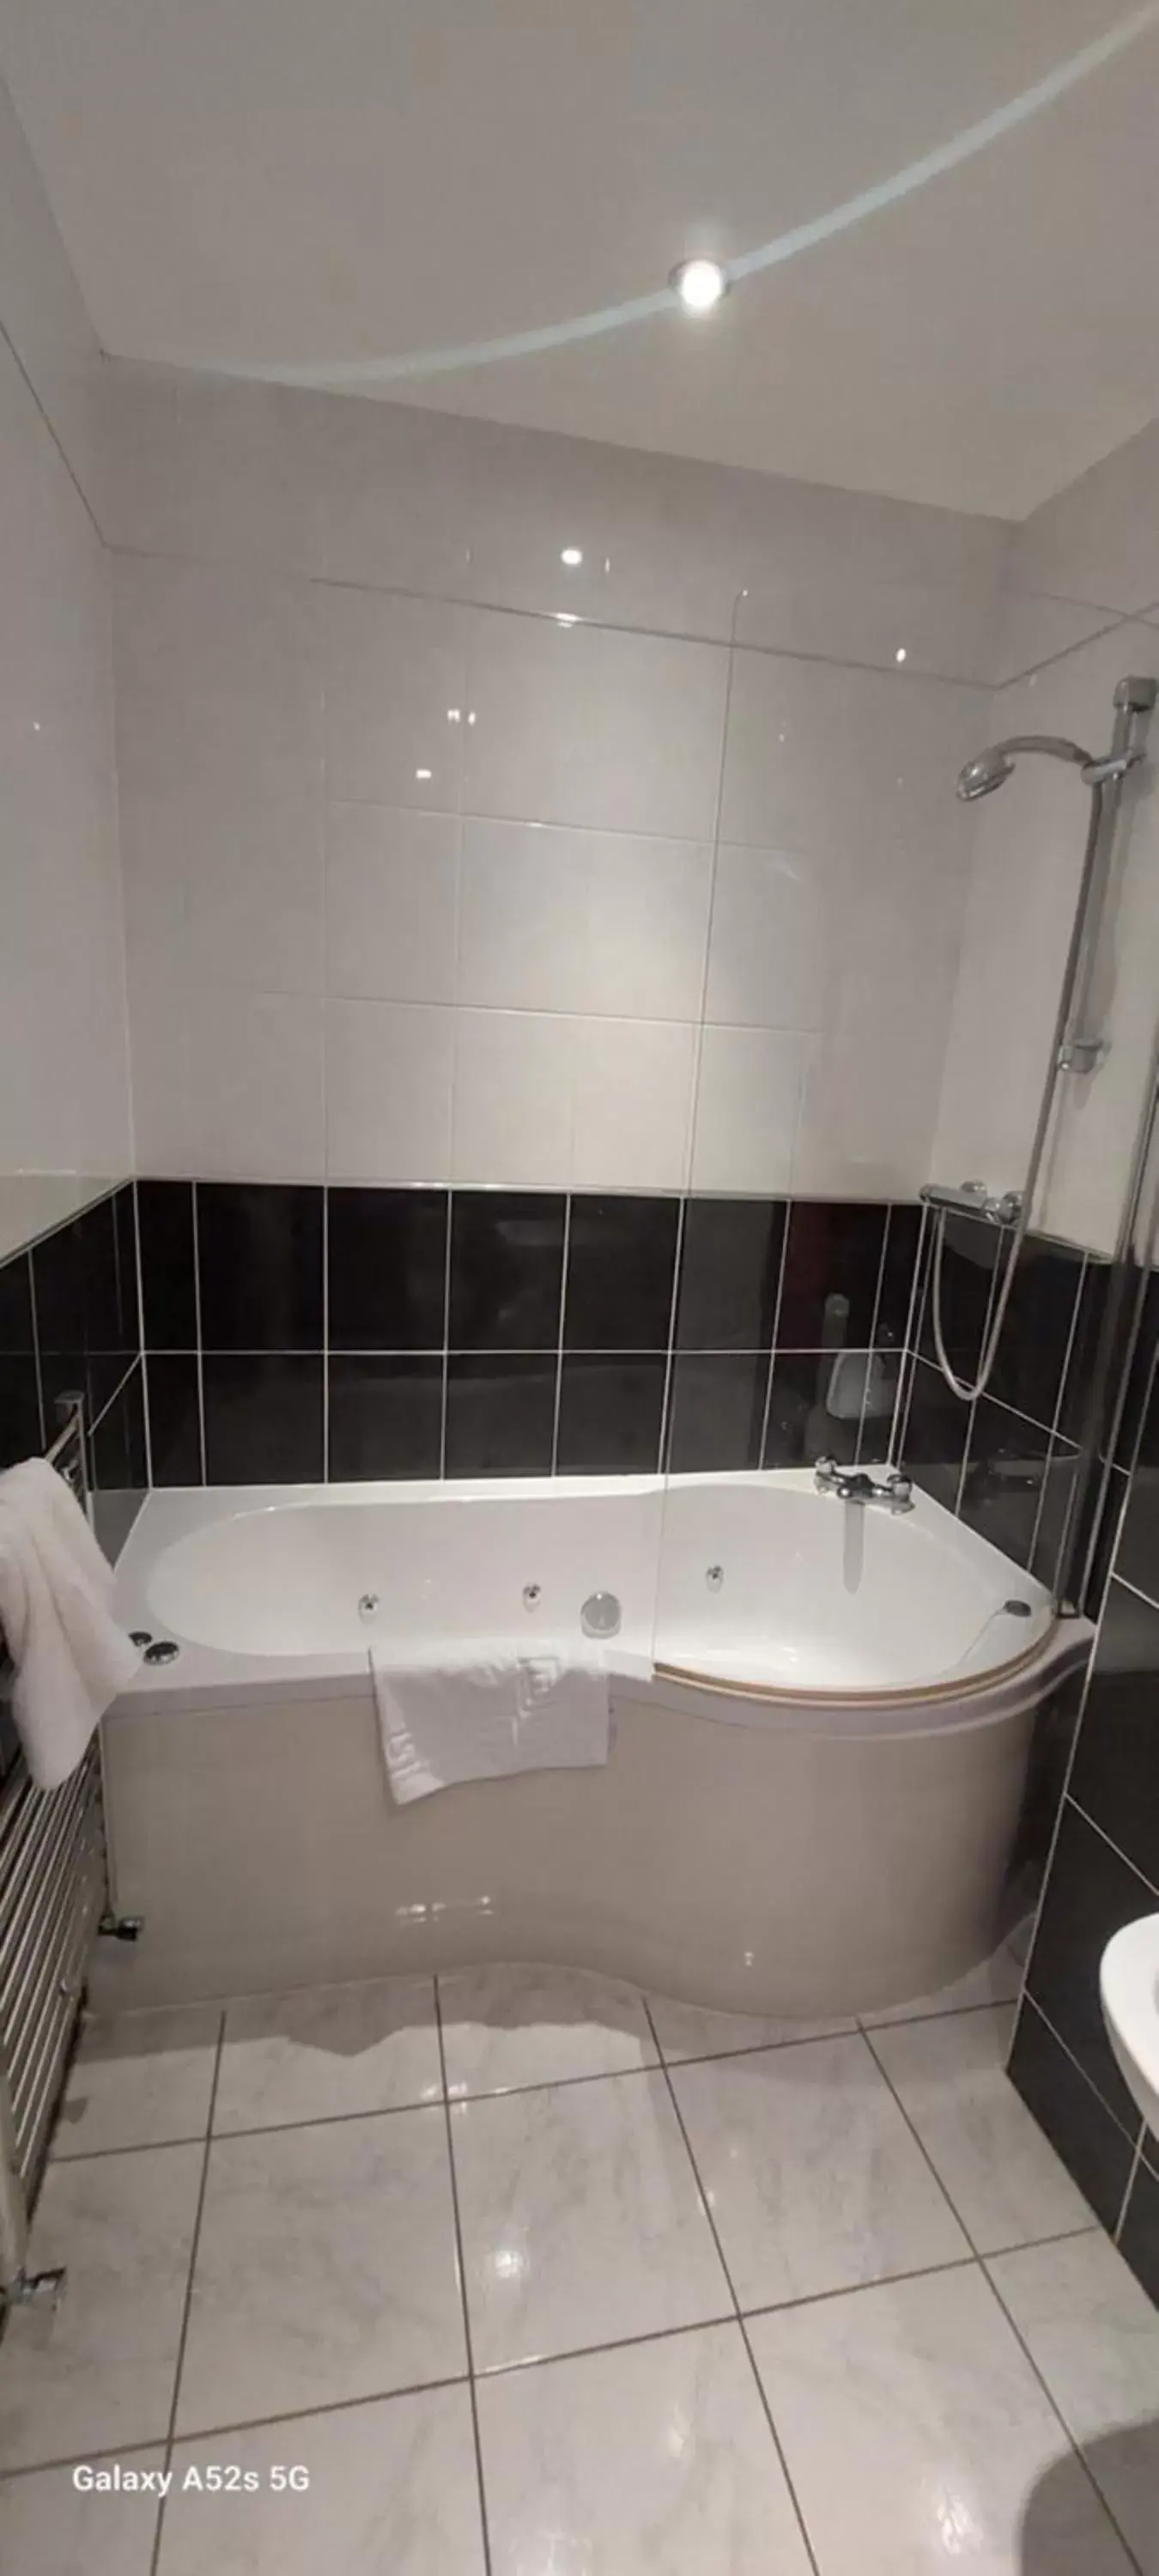 Bath, Bathroom in LONDONDERRYS Bar and Accommodation